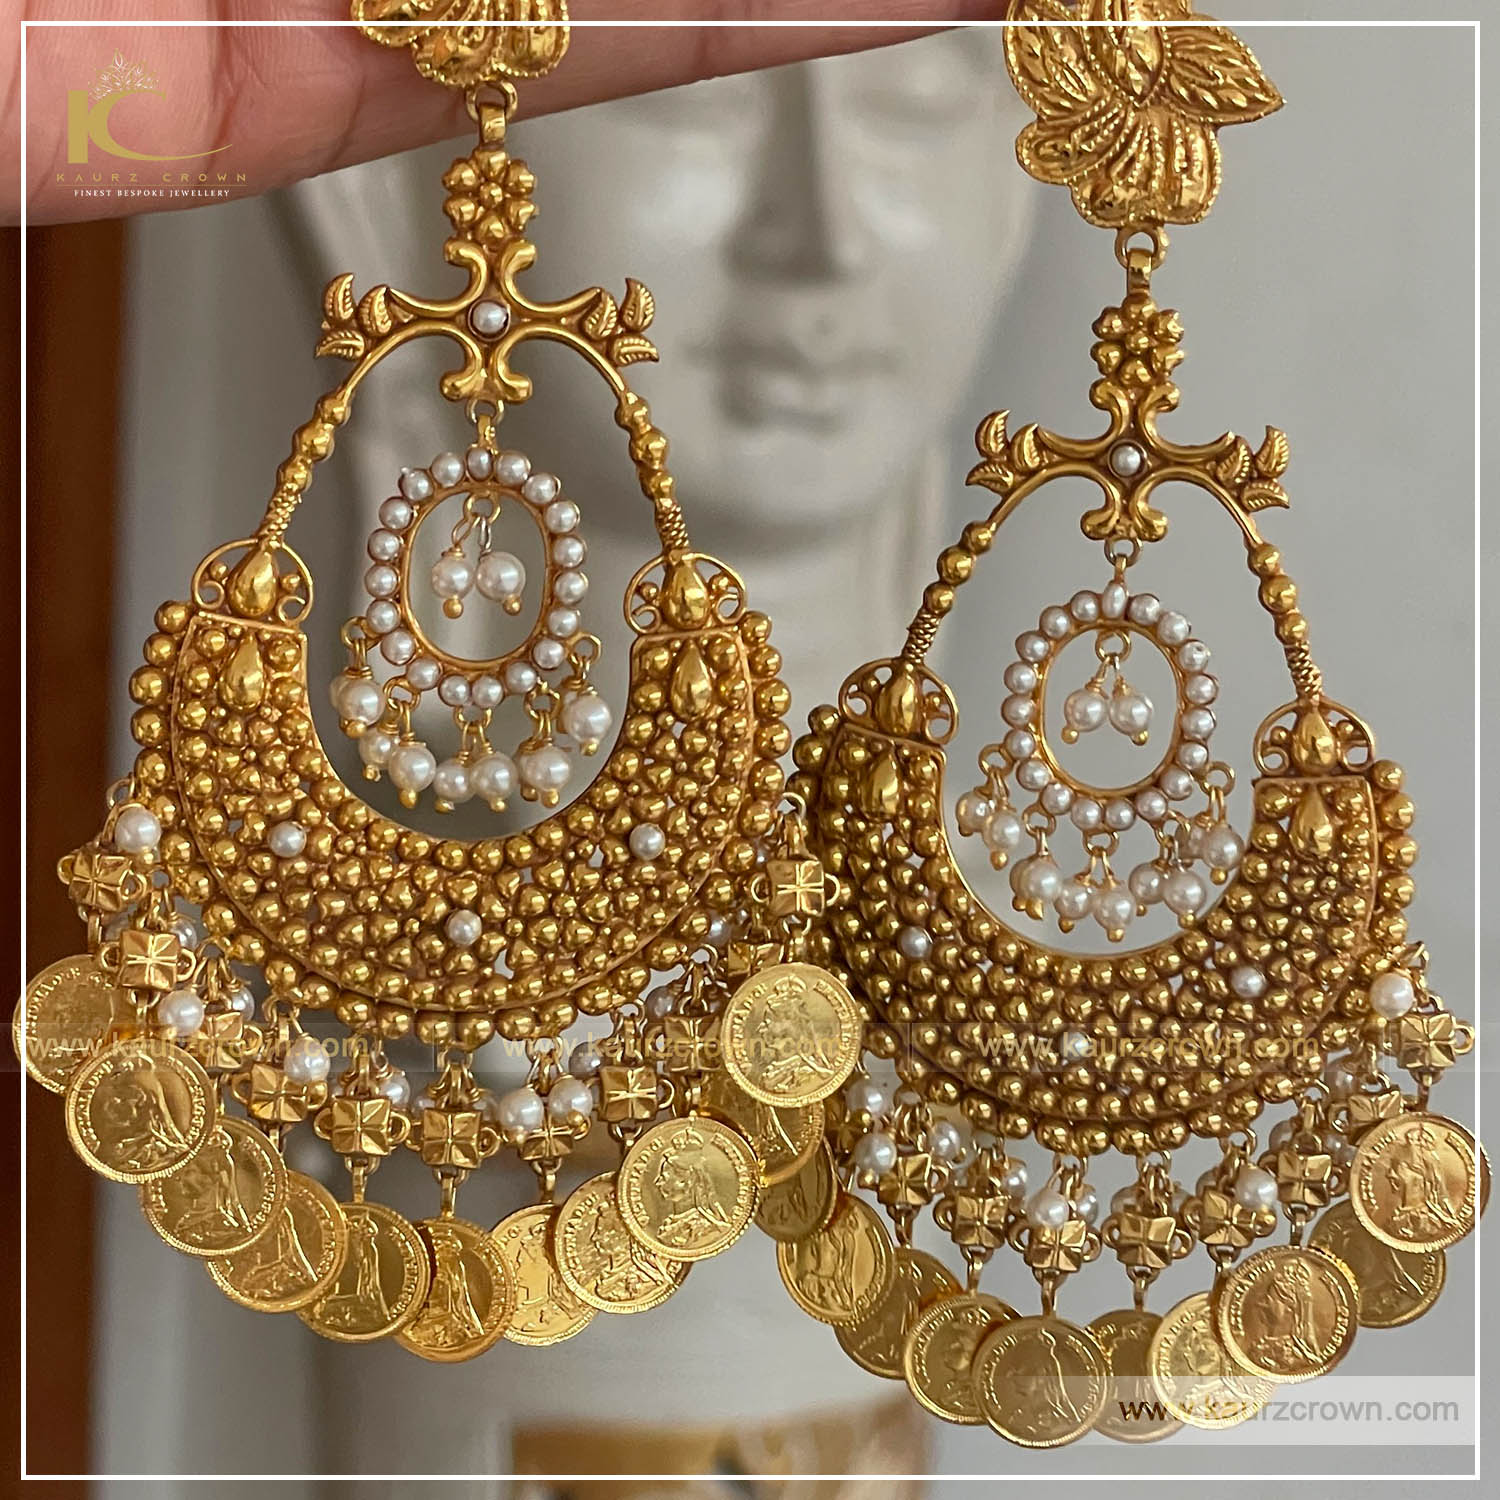 Ginni Grande Earrings , kaurz crown , punjabi jewellery , gold plated , online shop , jewellery store